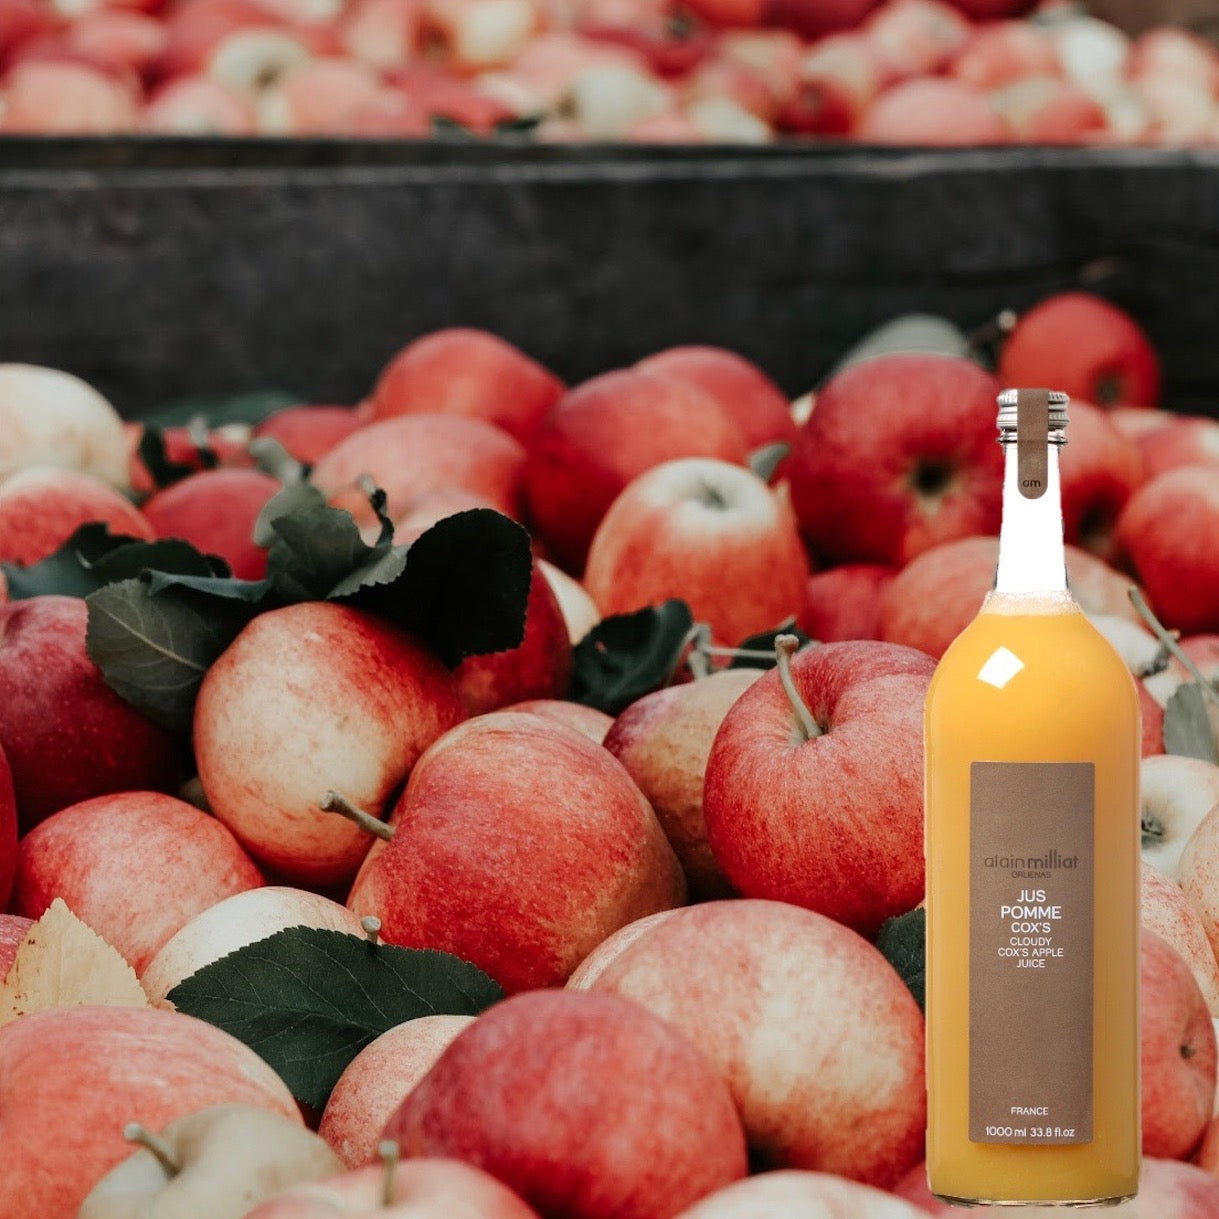 apple-juice-alain-milliat-online-grocery-delivery-singapore-thenewgrocer